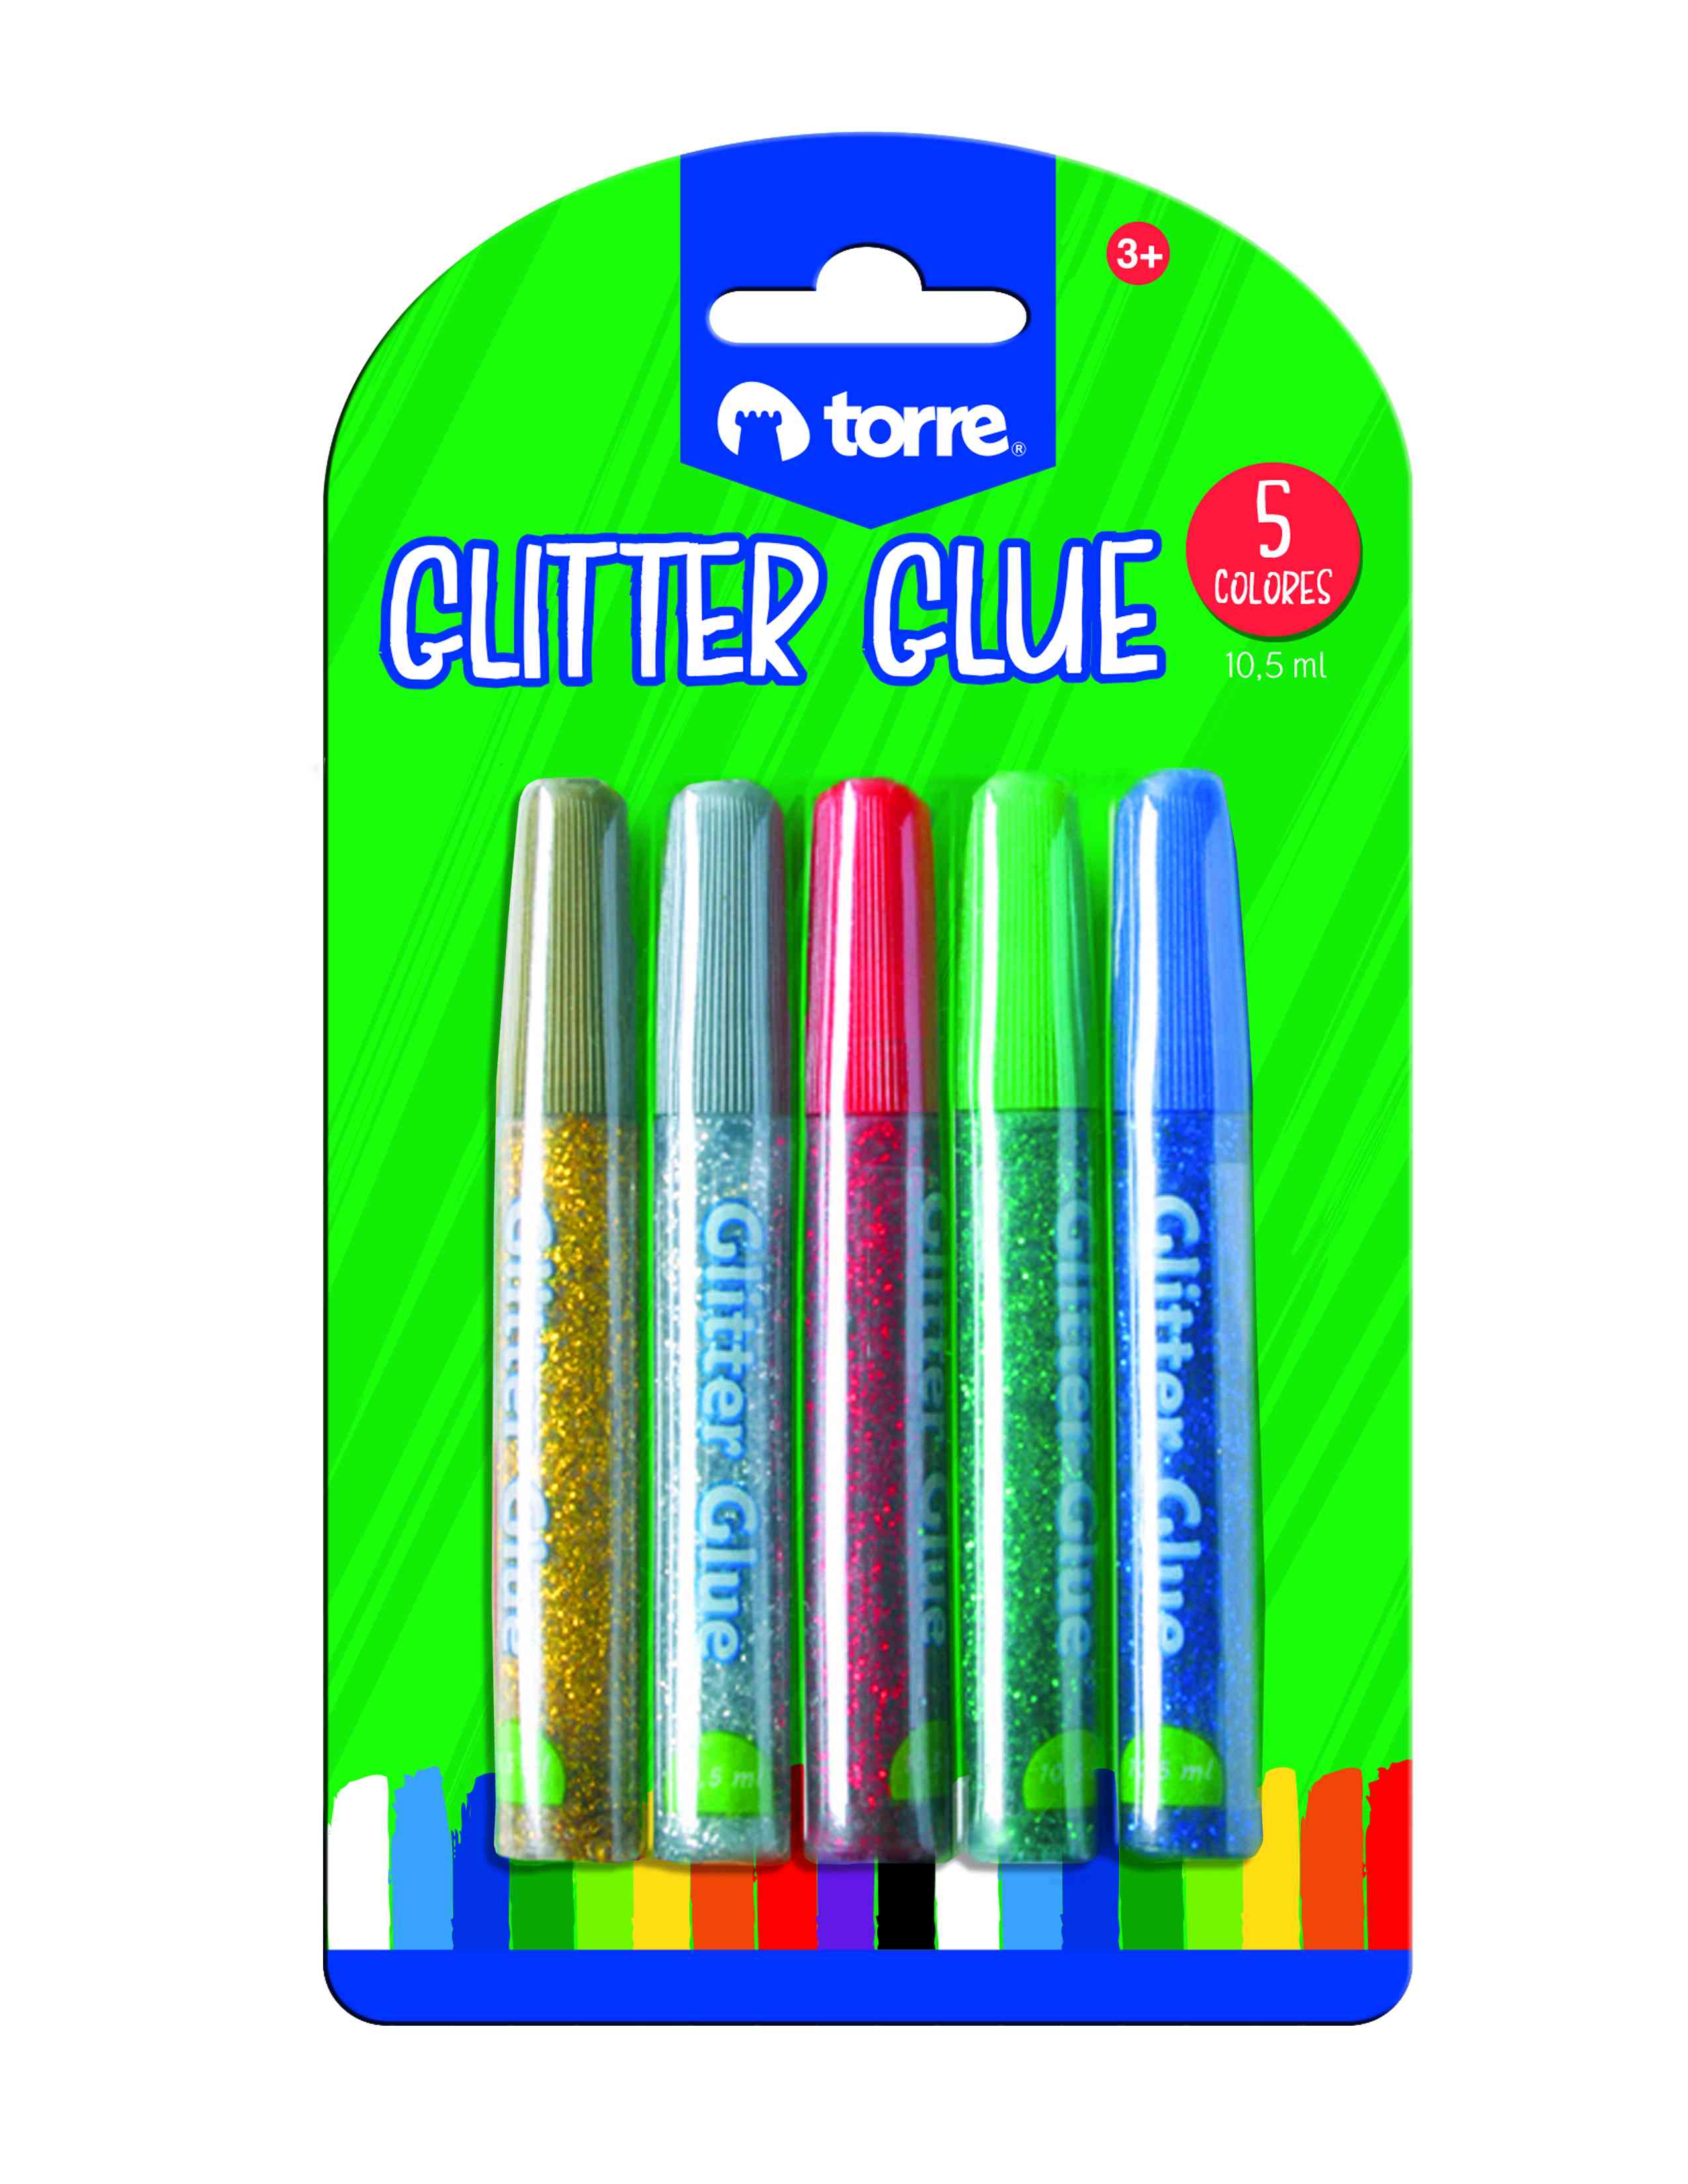 Glitter glue 5 colores Torre